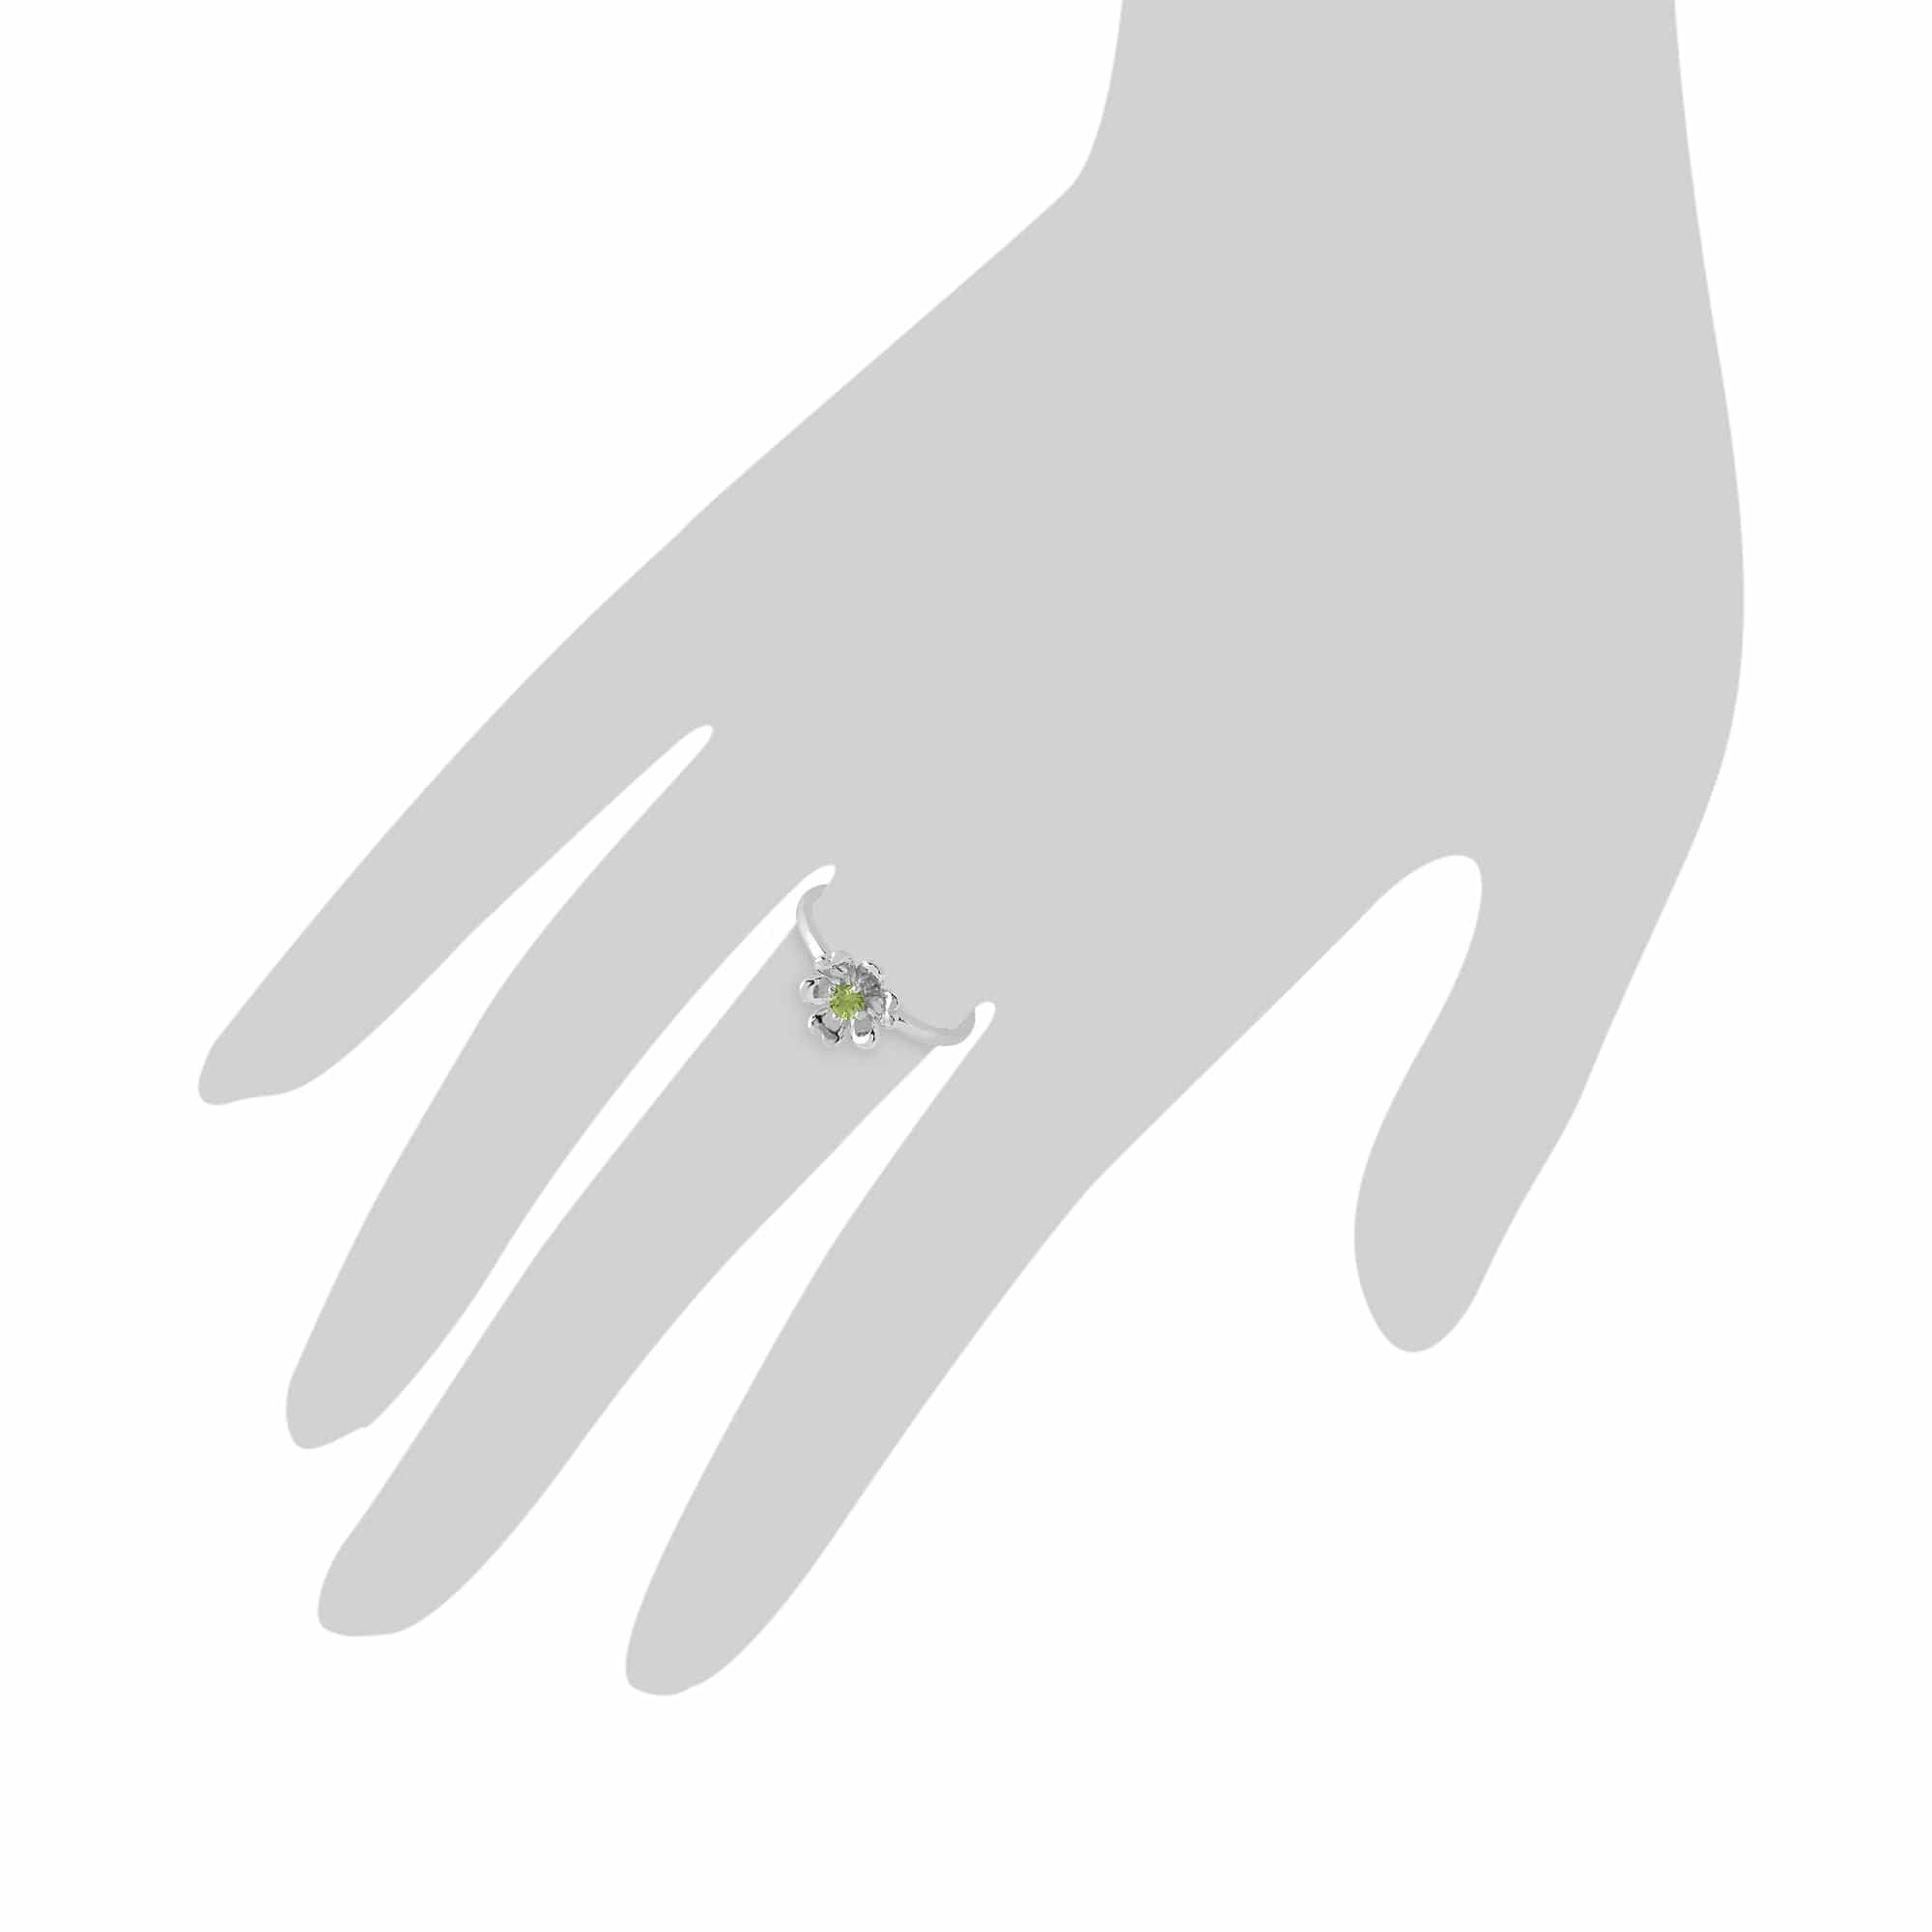 Gemondo 925 Sterling Silver 0.13ct Peridot Floral Ring Image 3